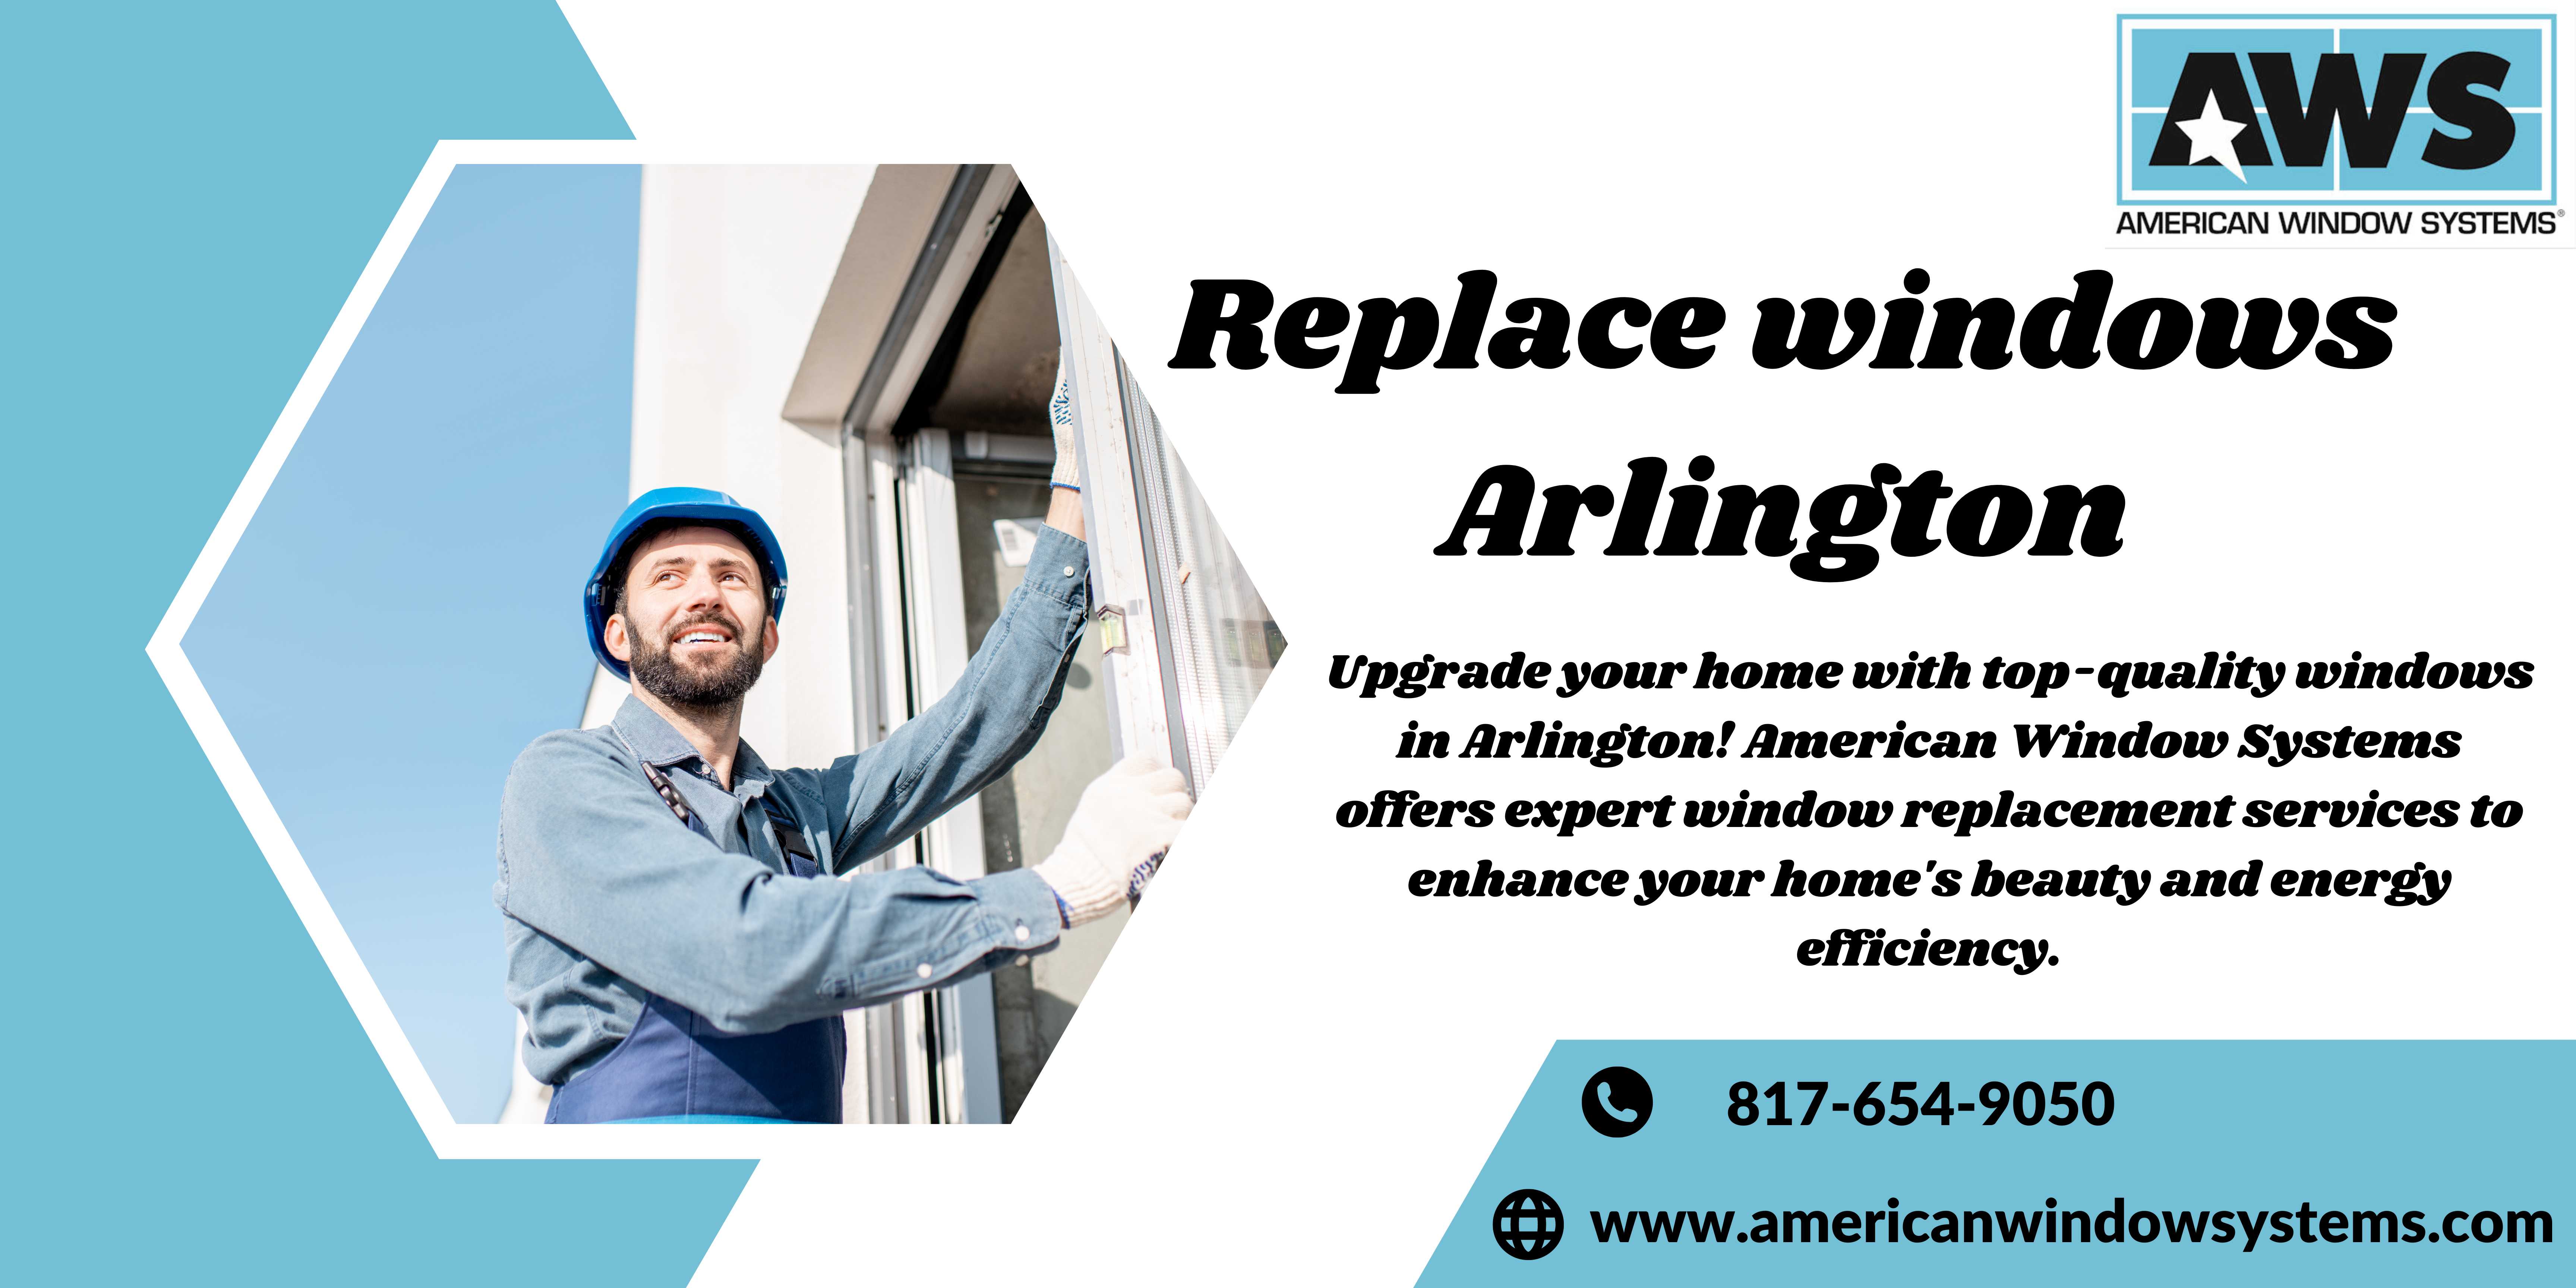 Replace windows Arlington      Upgrade your home w..